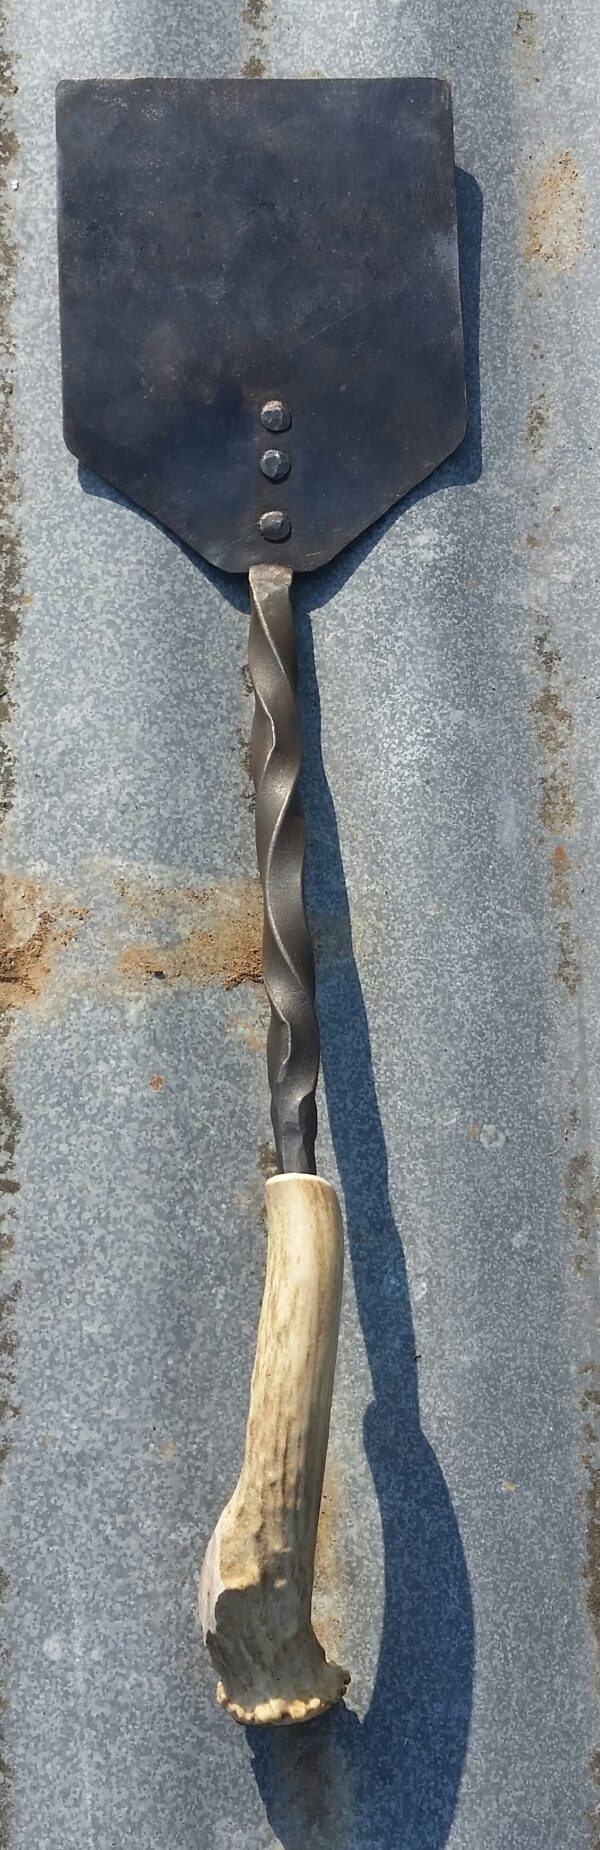 Handmade steel BBQ spatula with antler handle and twist design